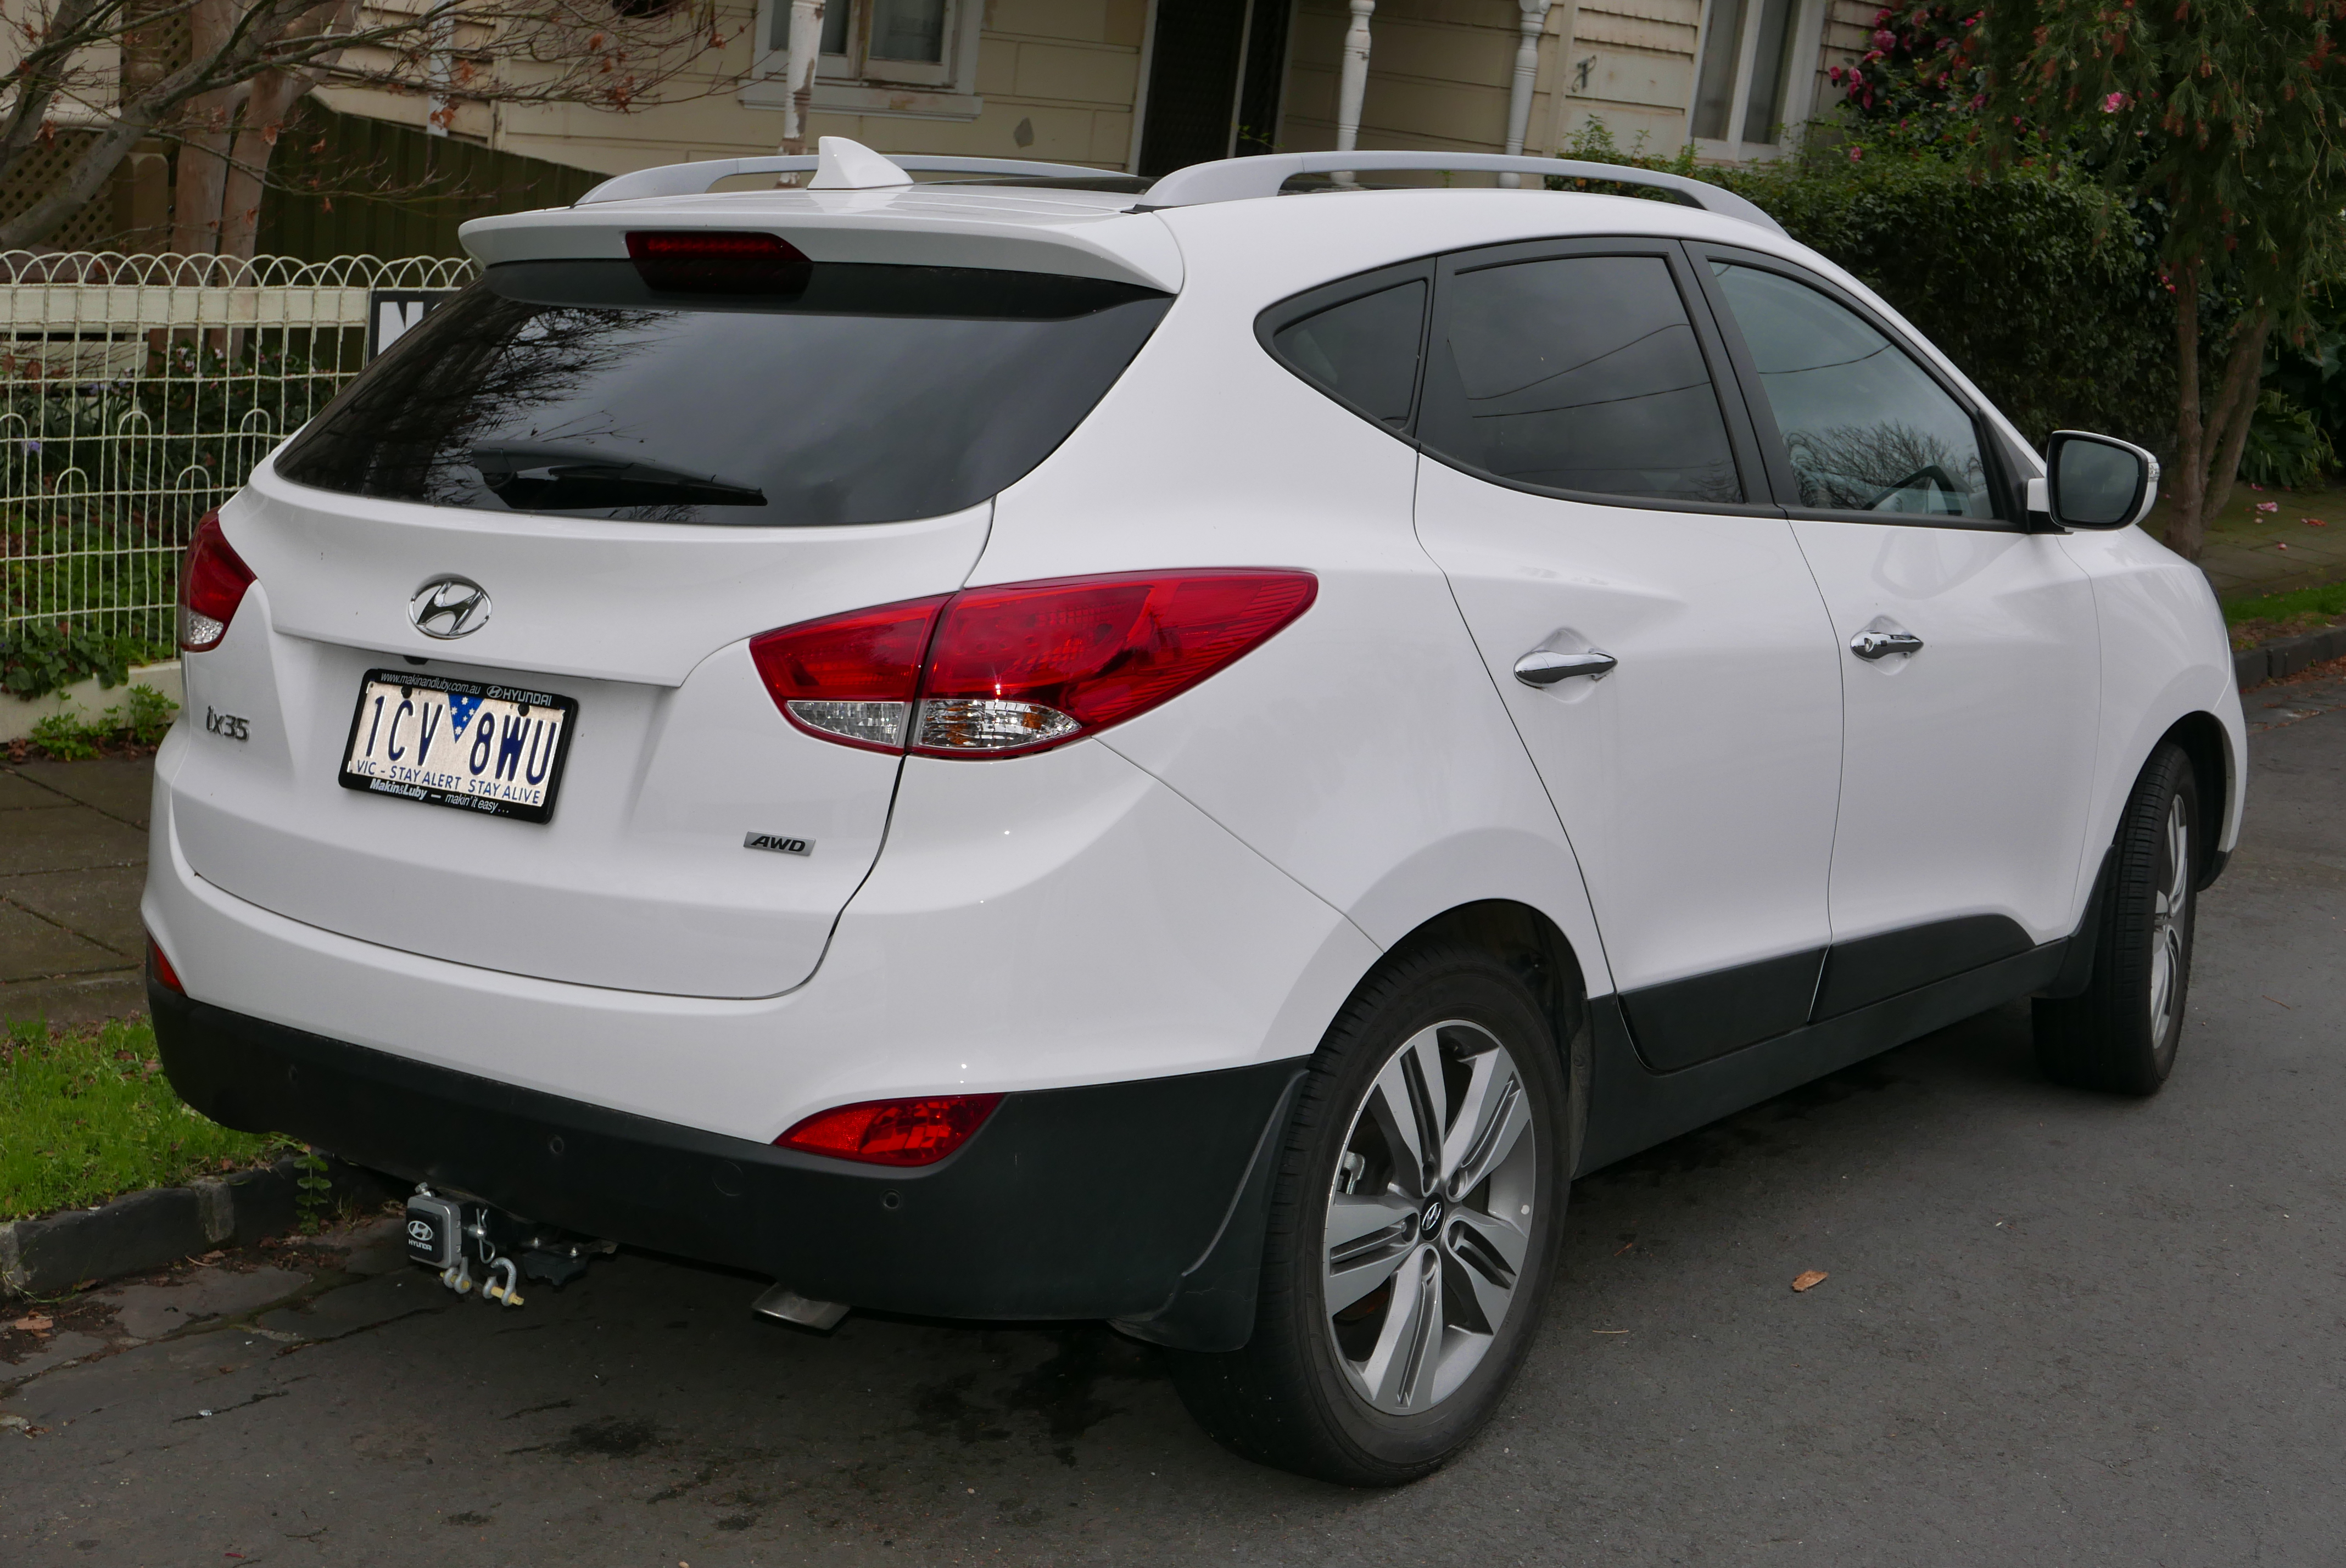 Used Hyundai ix35 Estate (2010 - 2015) Review